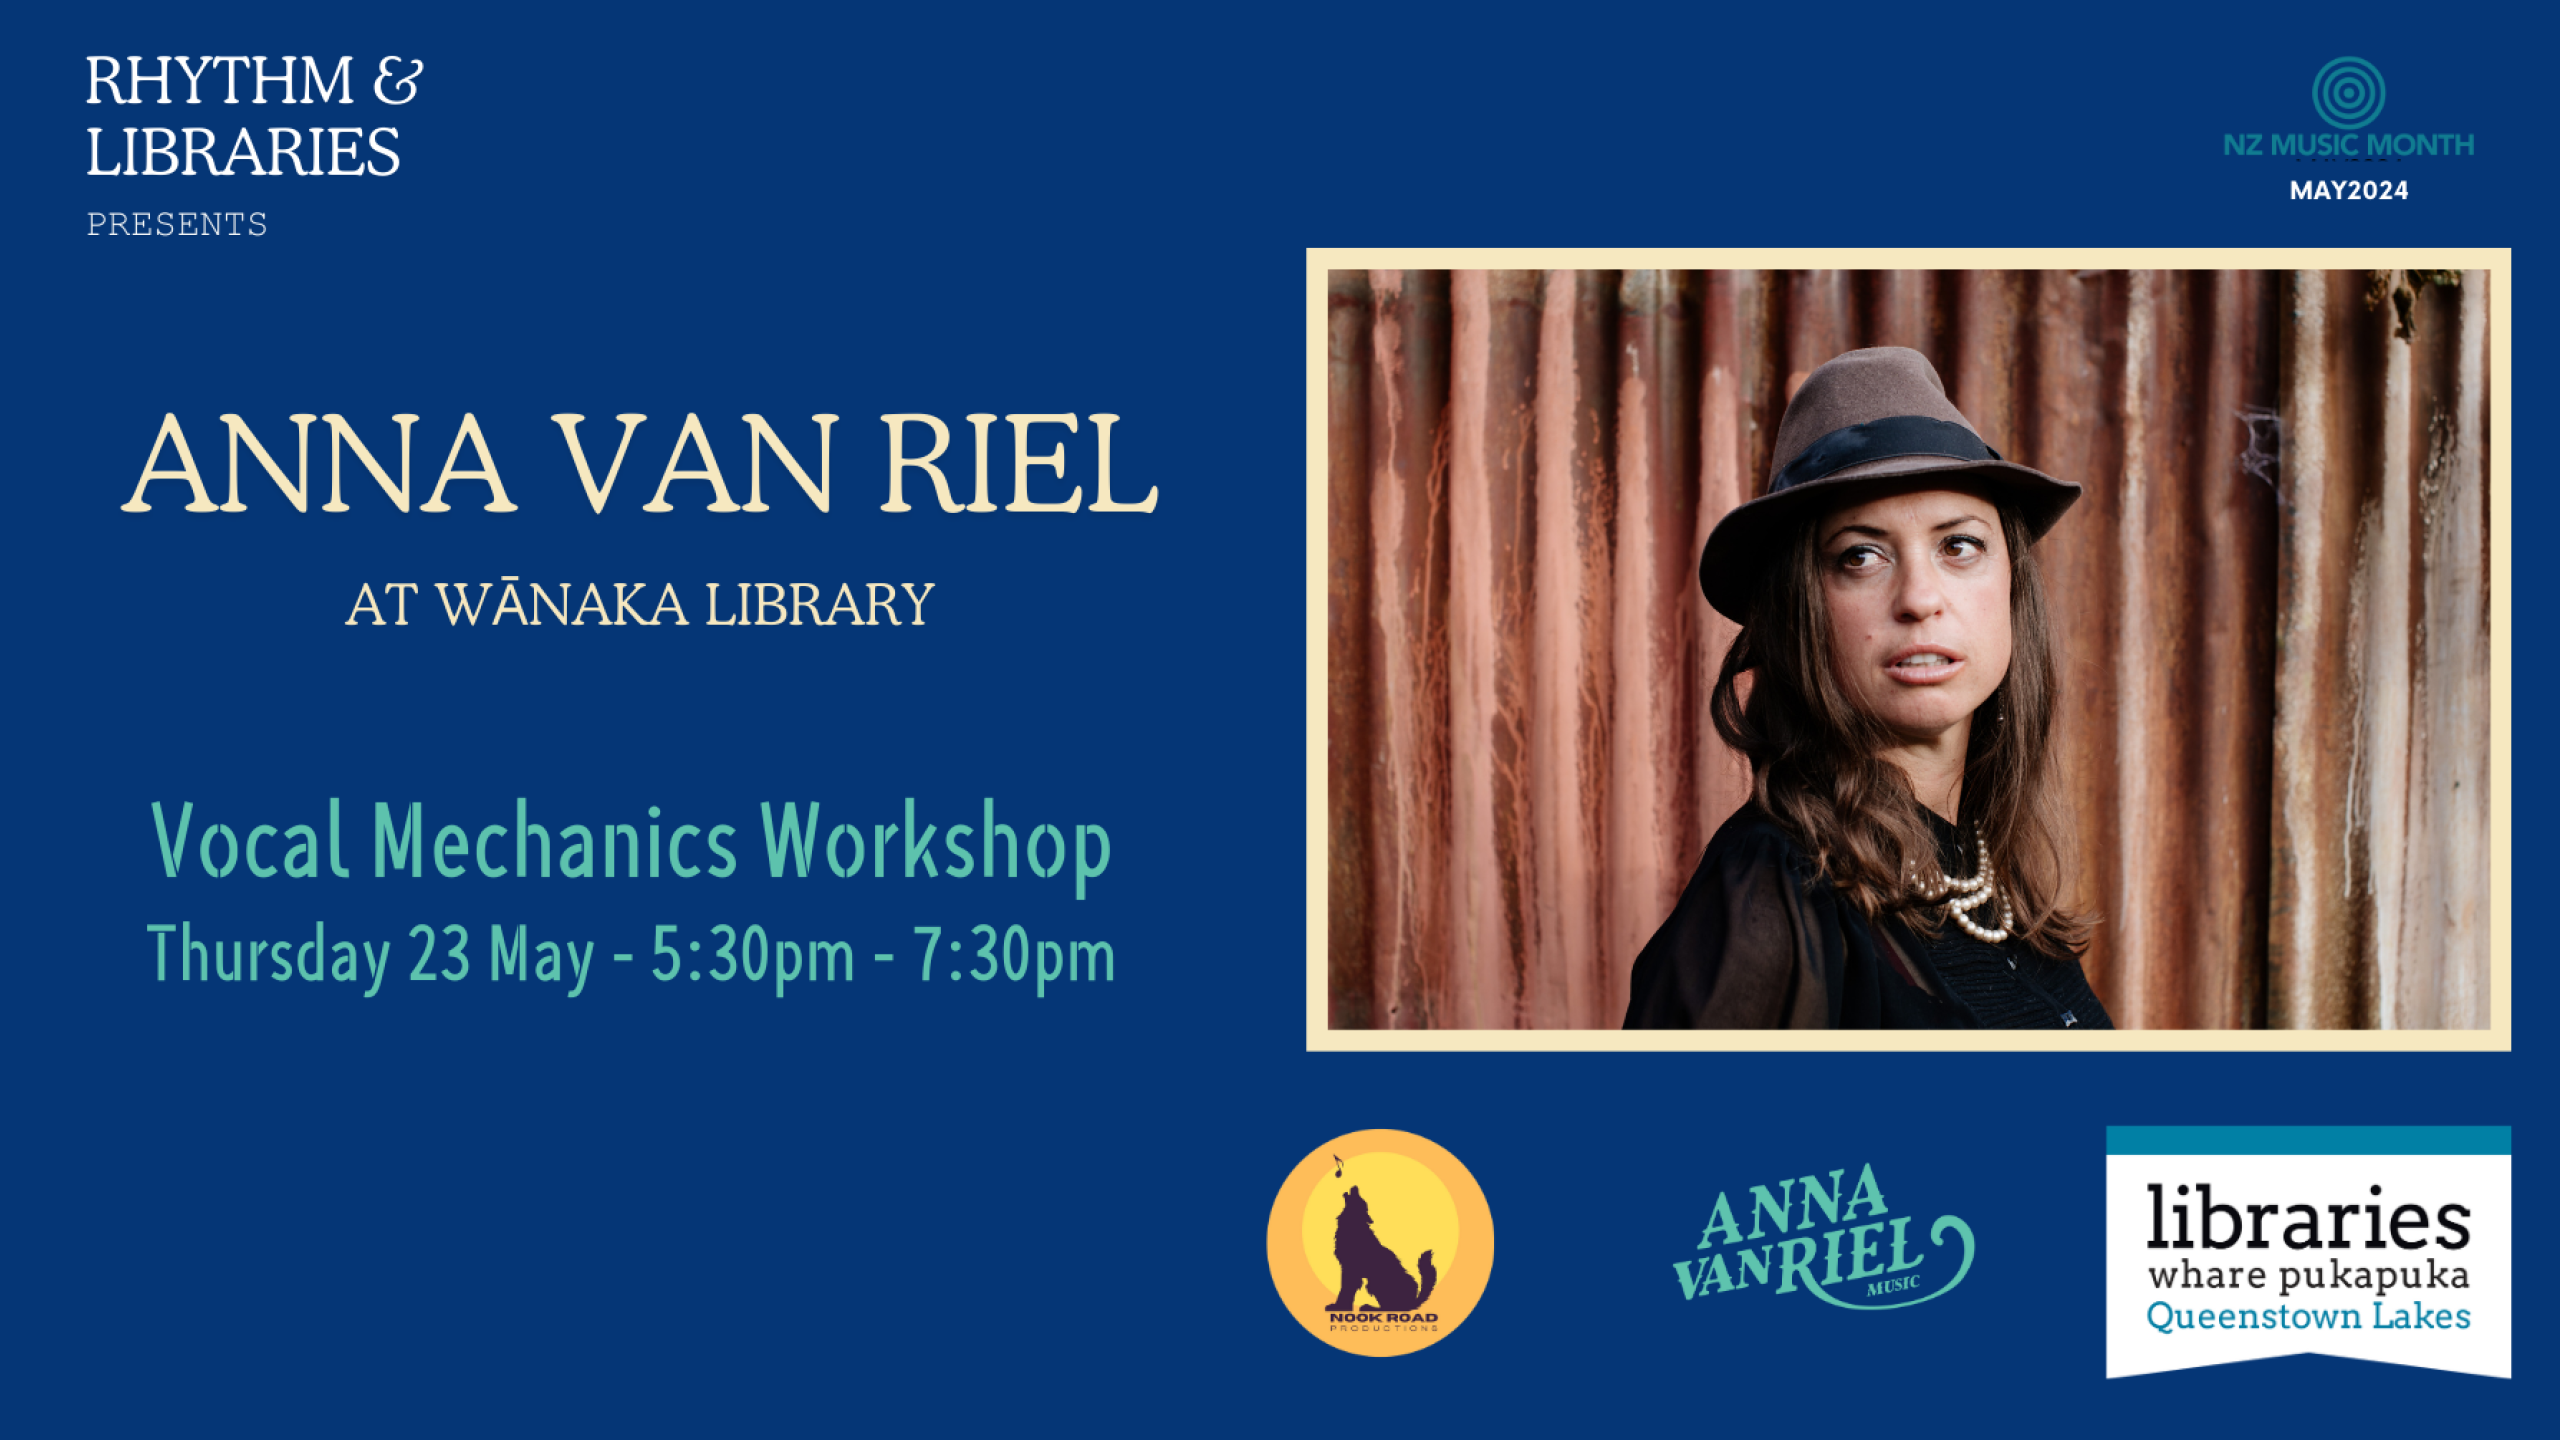  Vocal Mechanics Workshop with Anna van Riel thumbnail